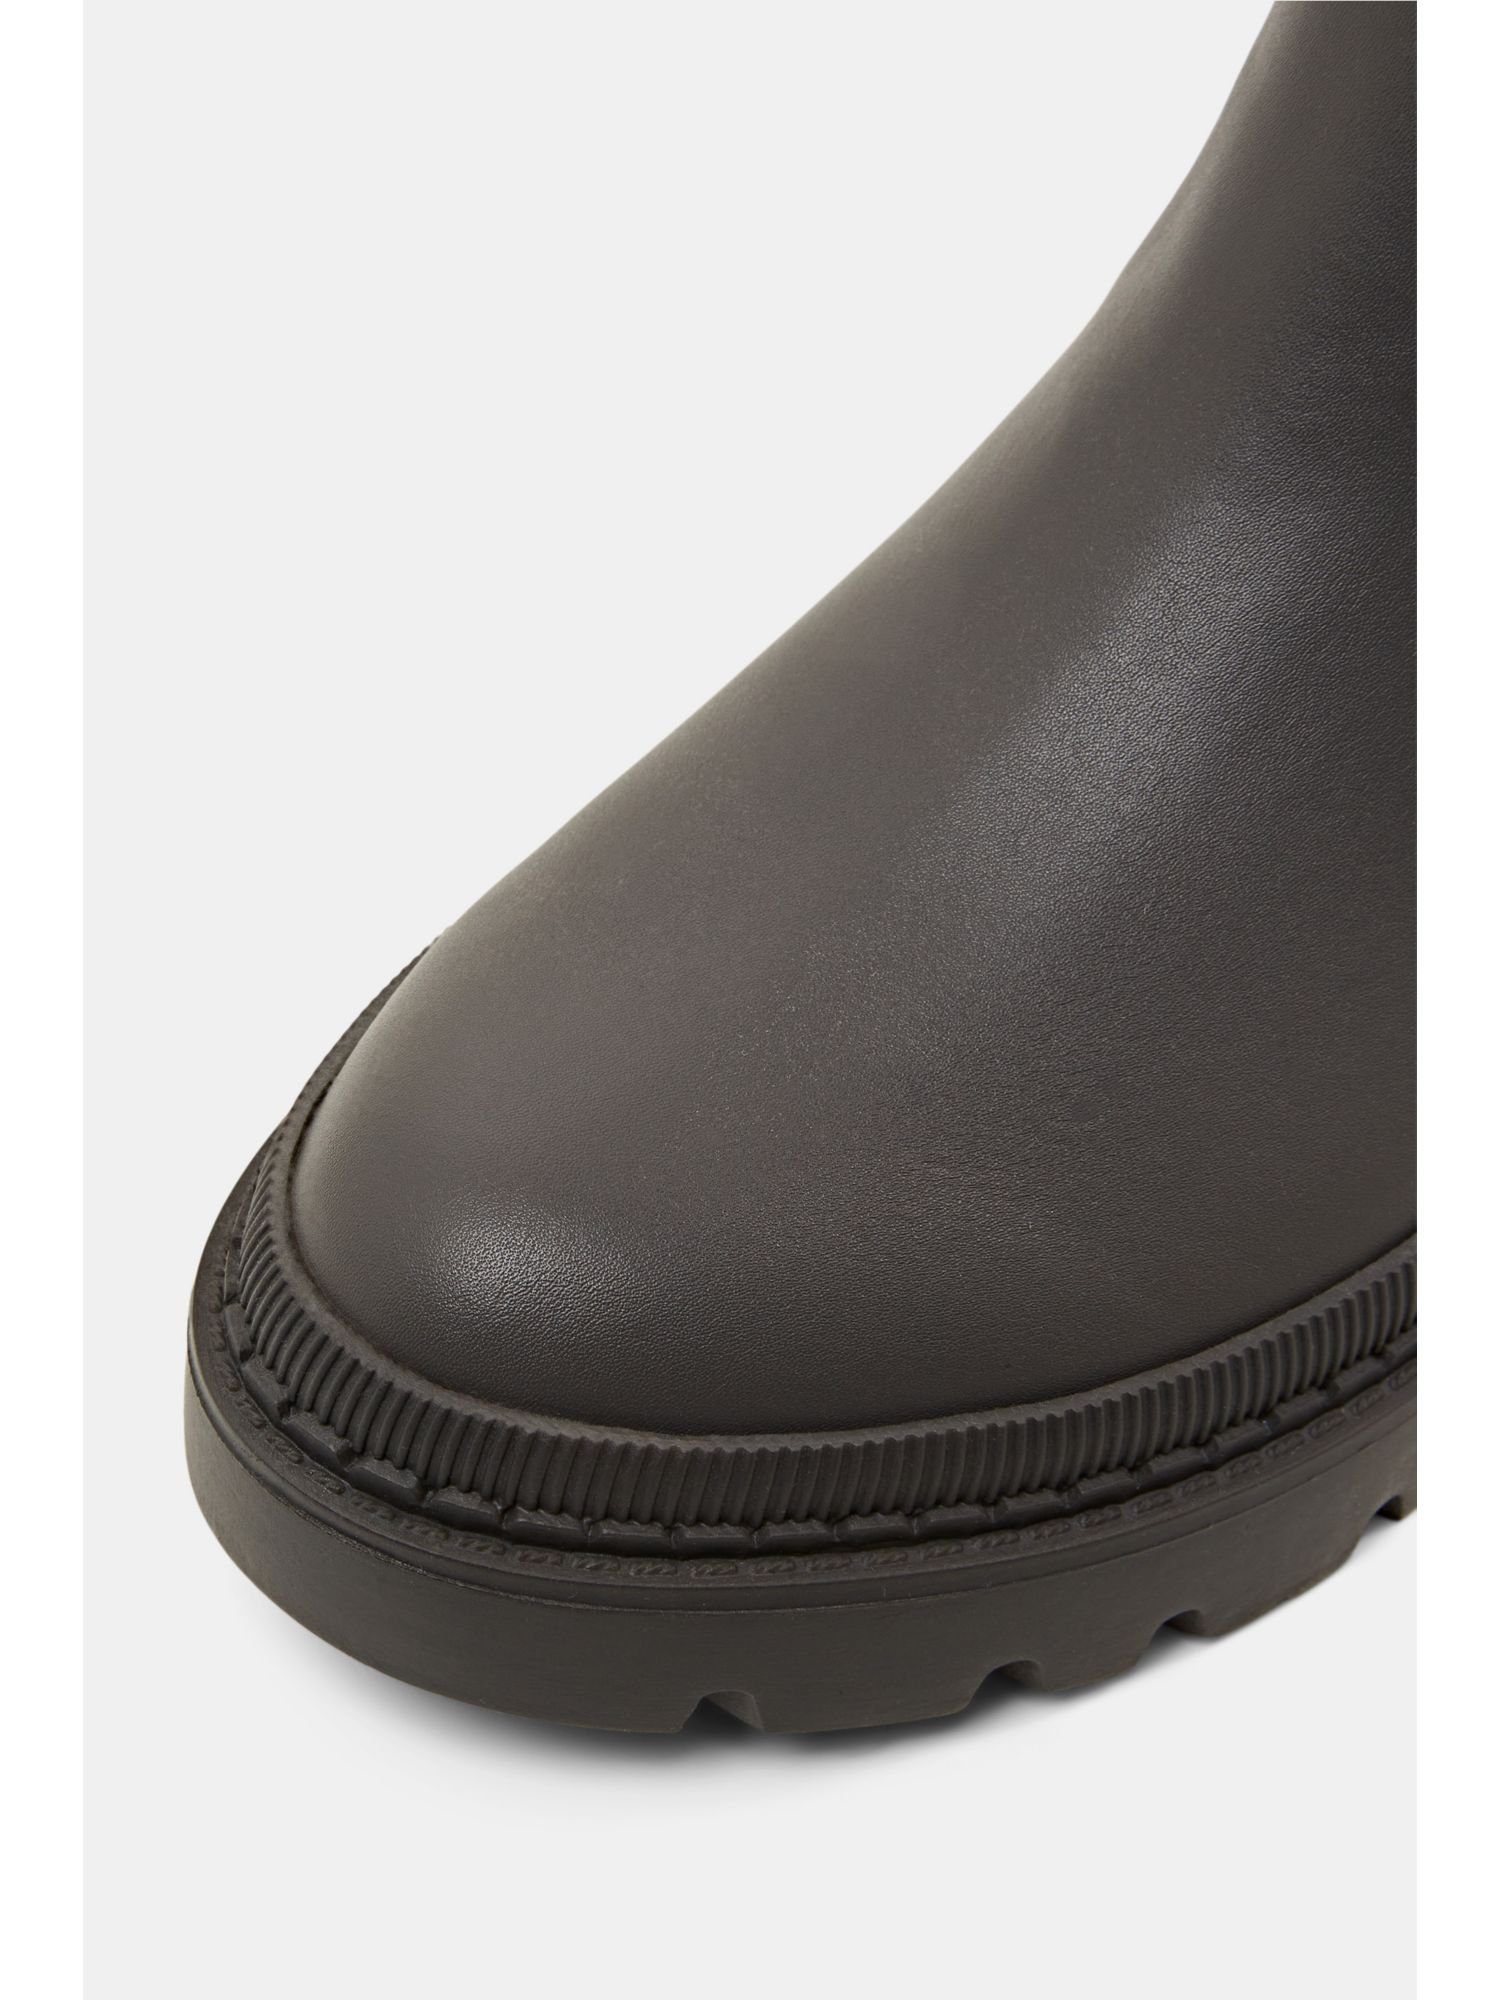 Esprit Grobe in Stiefelette Lederoptik GREY DARK Boots